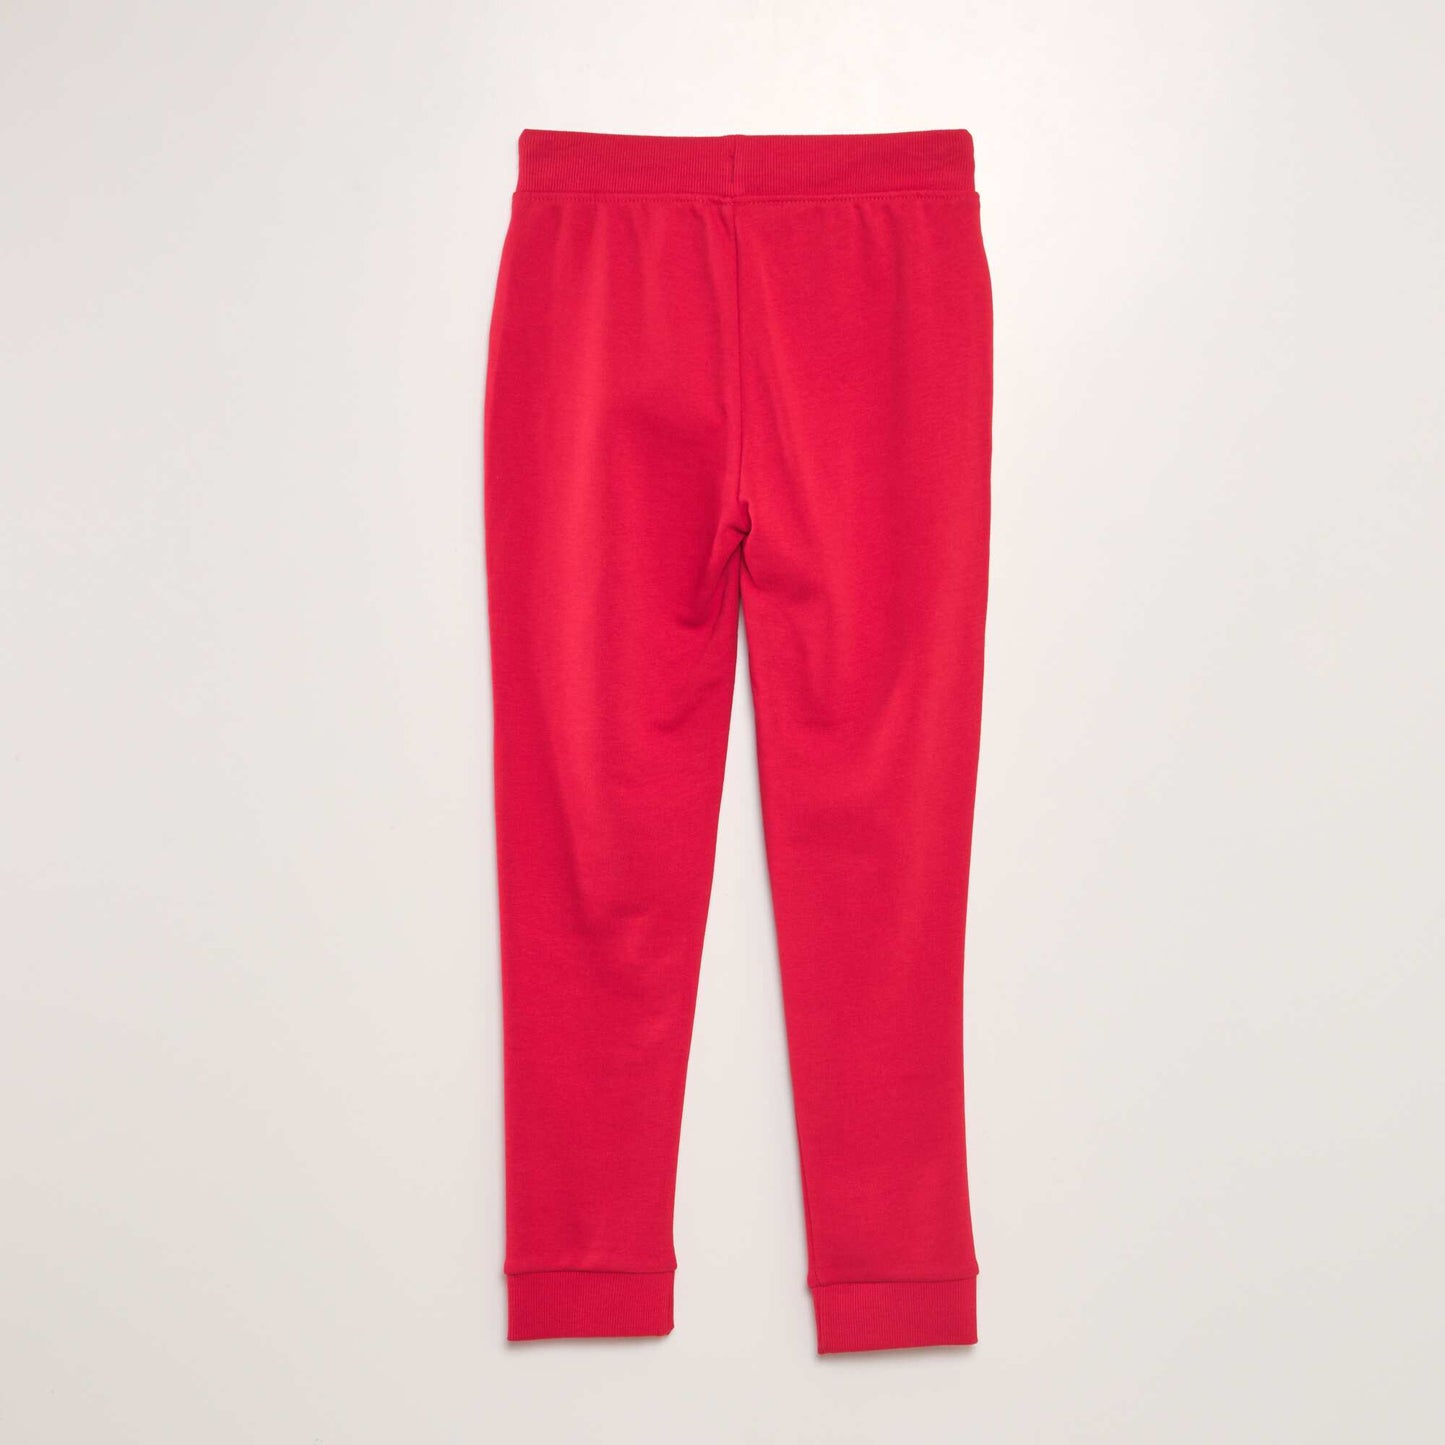 Plain sweatshirt fabric trousers RED